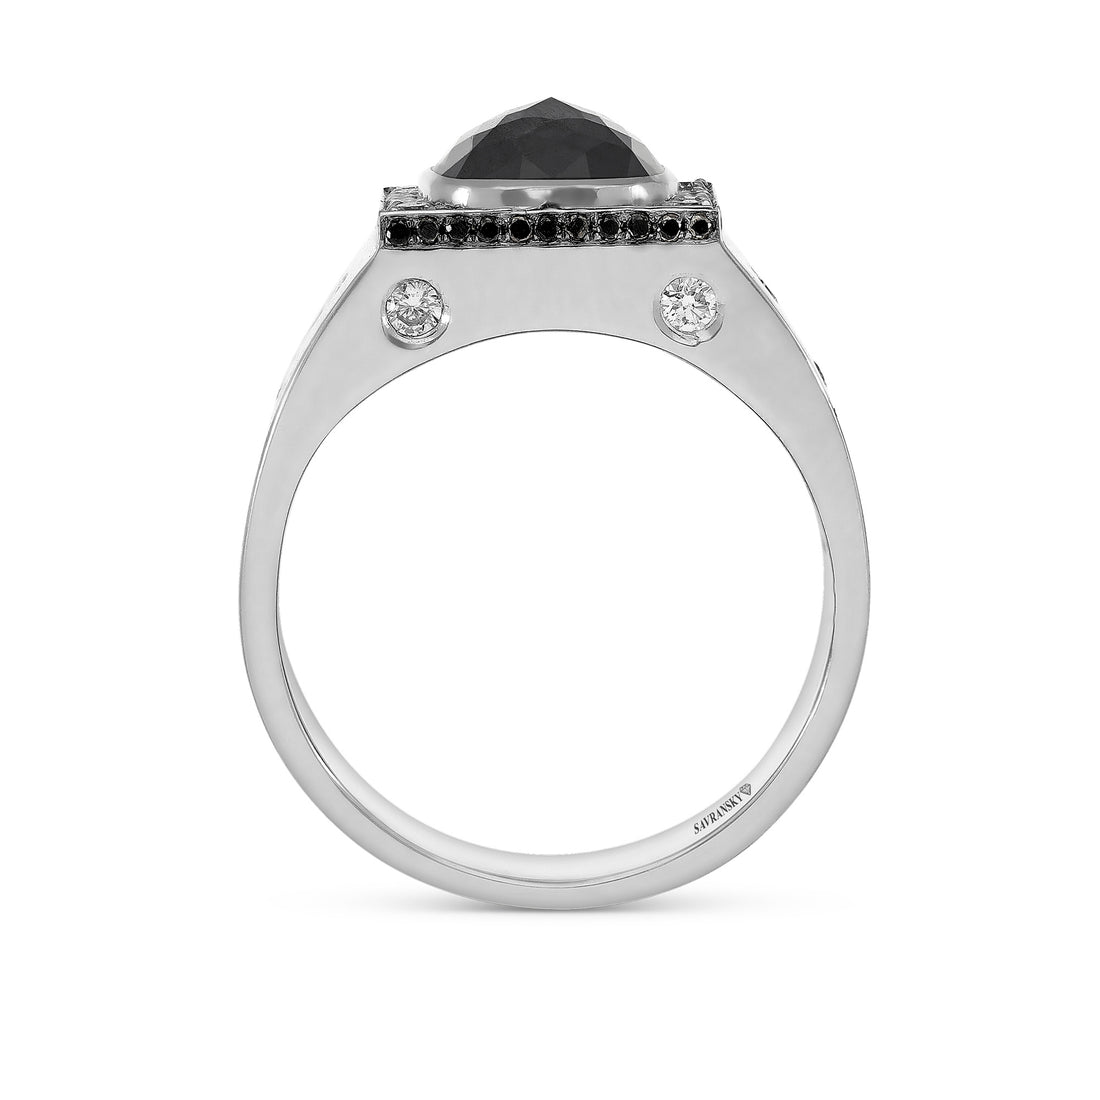 Men's Black Diamond Ring - 4.79 Carat